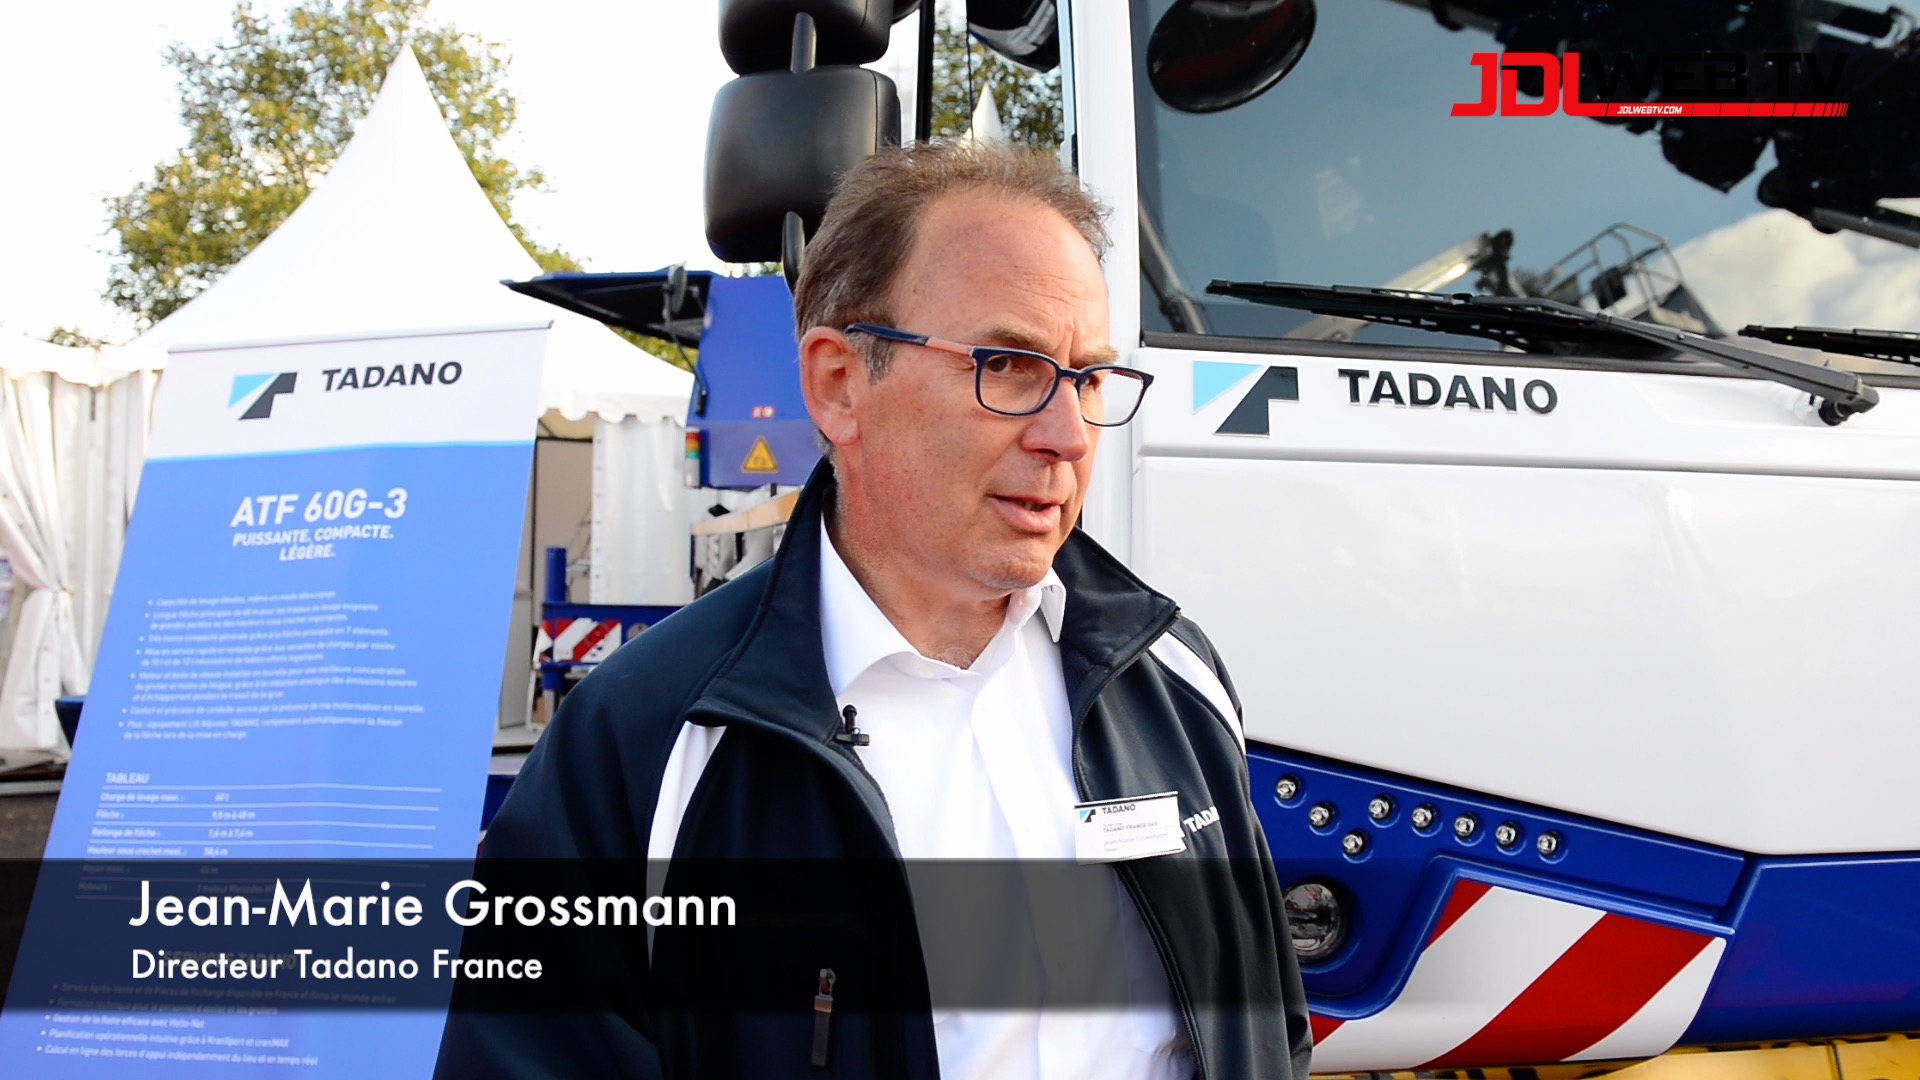 Interview JDL de Mr Jean-marie Grossmann, Directeur de Tadano France